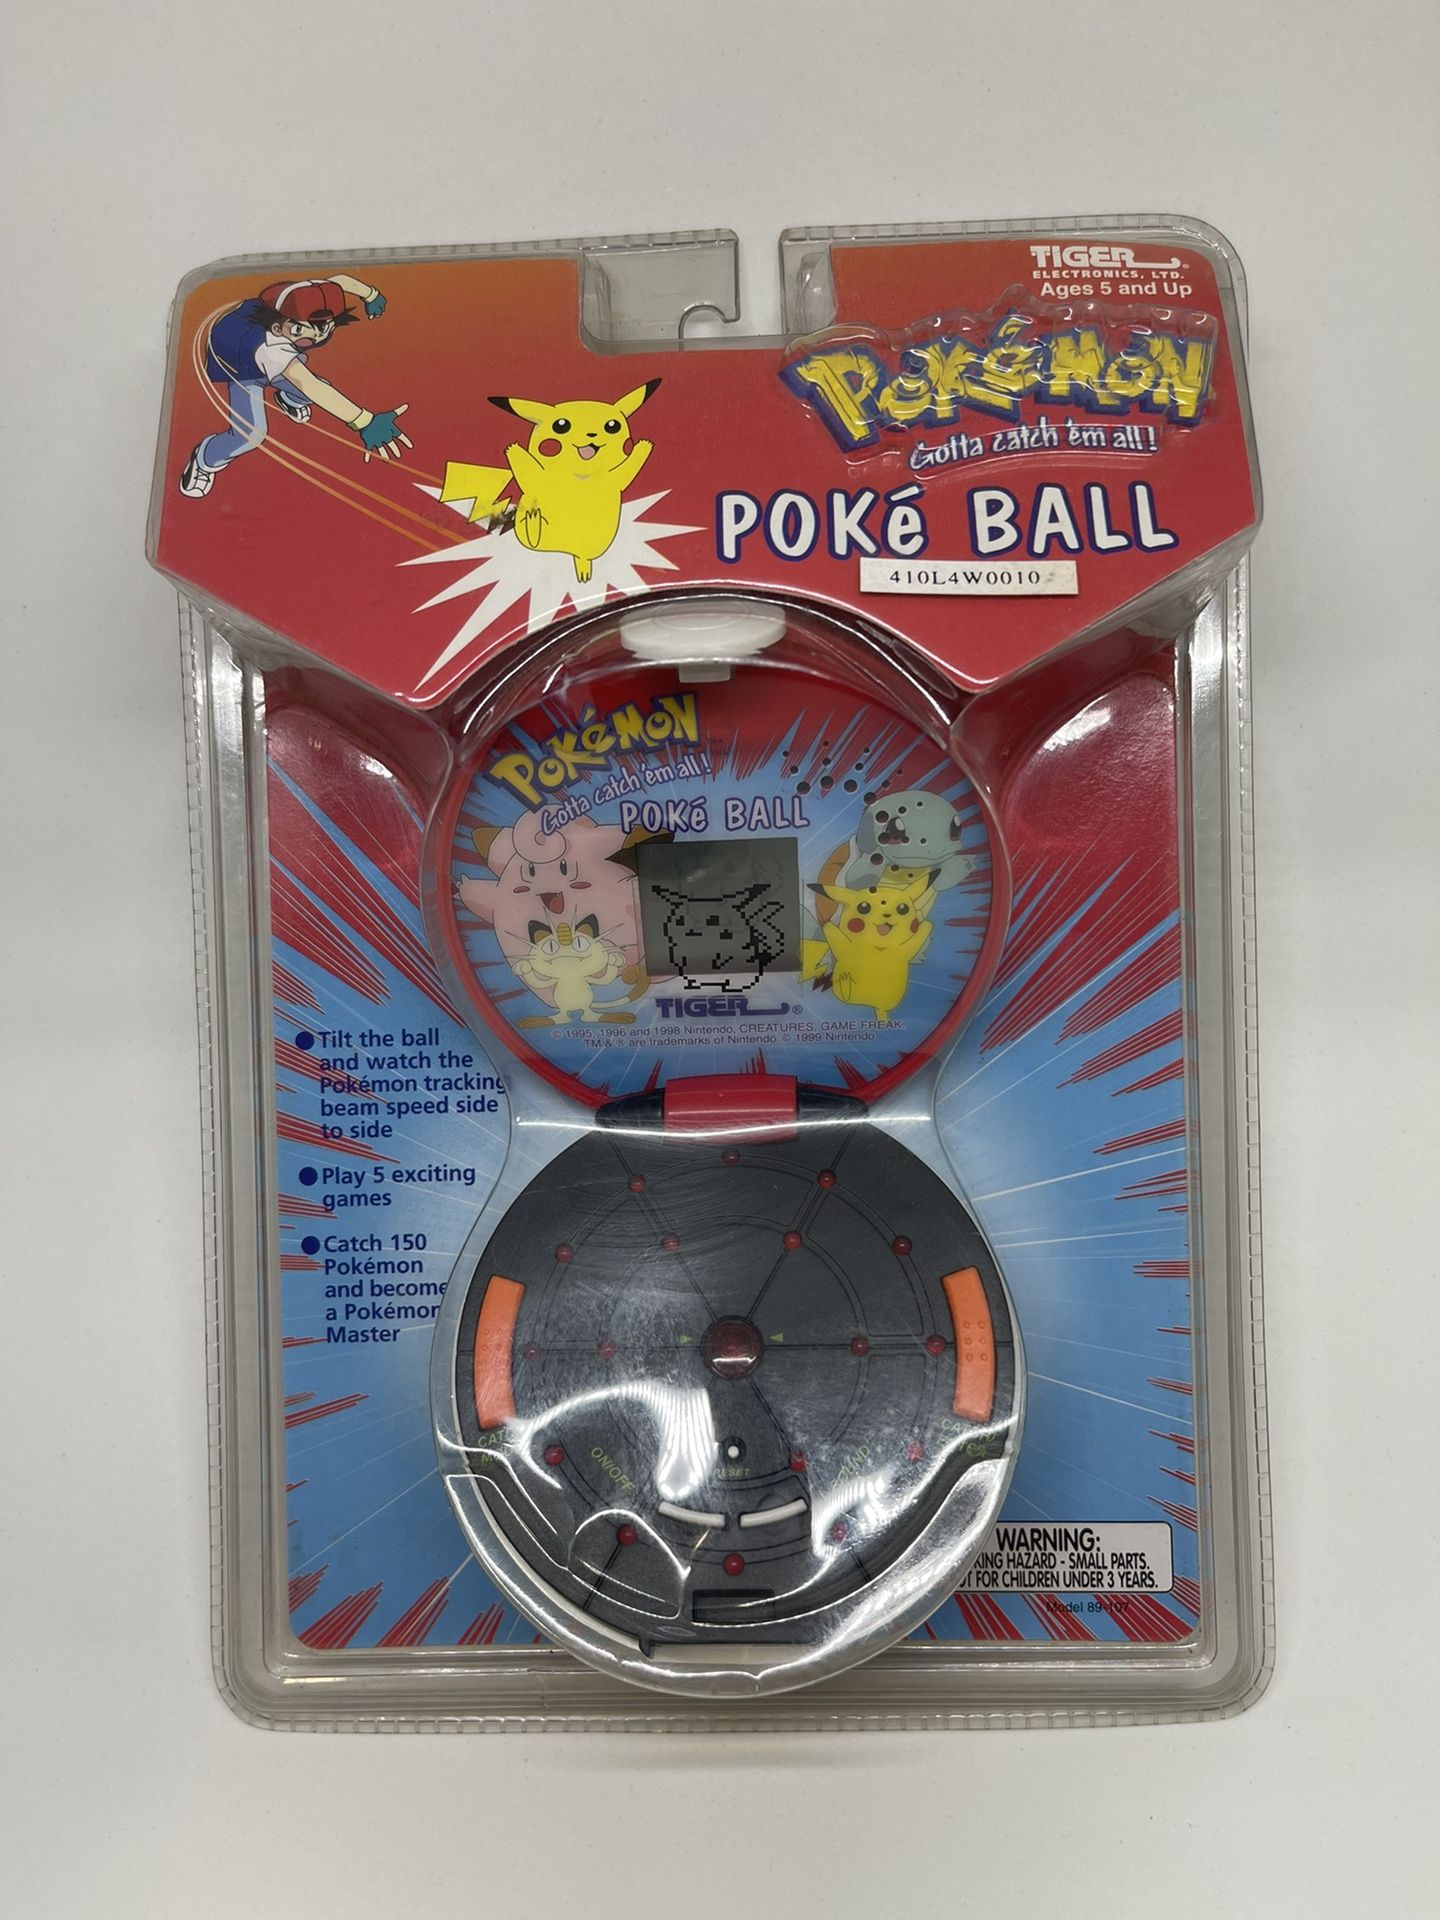 New Pokemon Poke Ball Tiger Electronics 1999 VINTAGE Factory-Sealed Pokeball